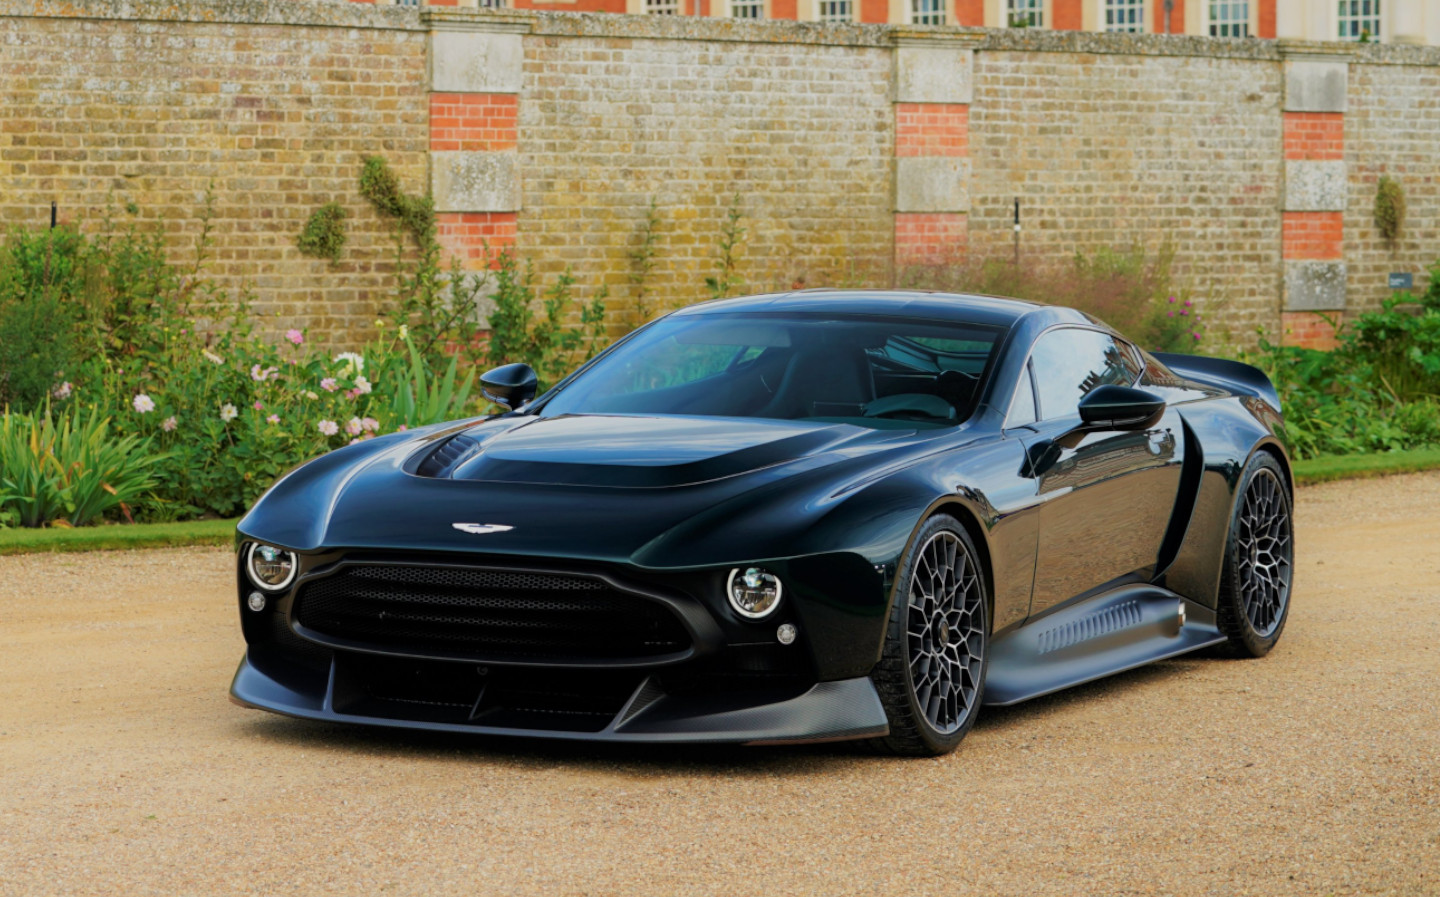 The Aston Martin Victor